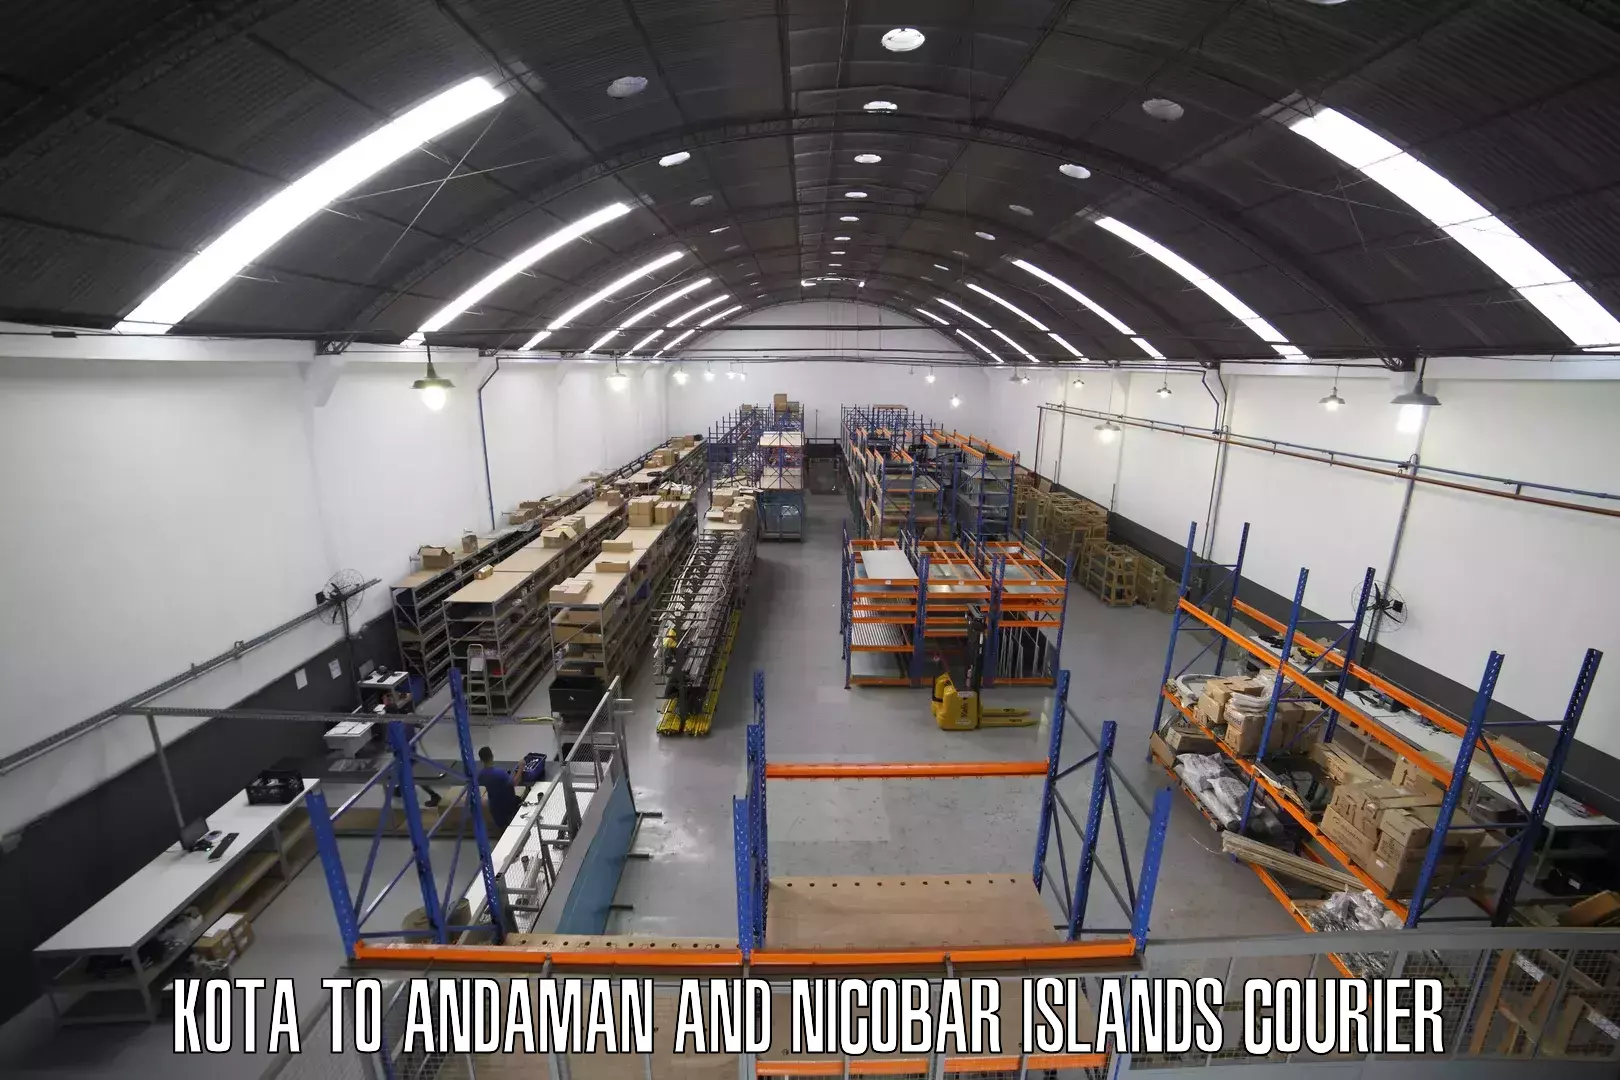 Courier service innovation Kota to Andaman and Nicobar Islands